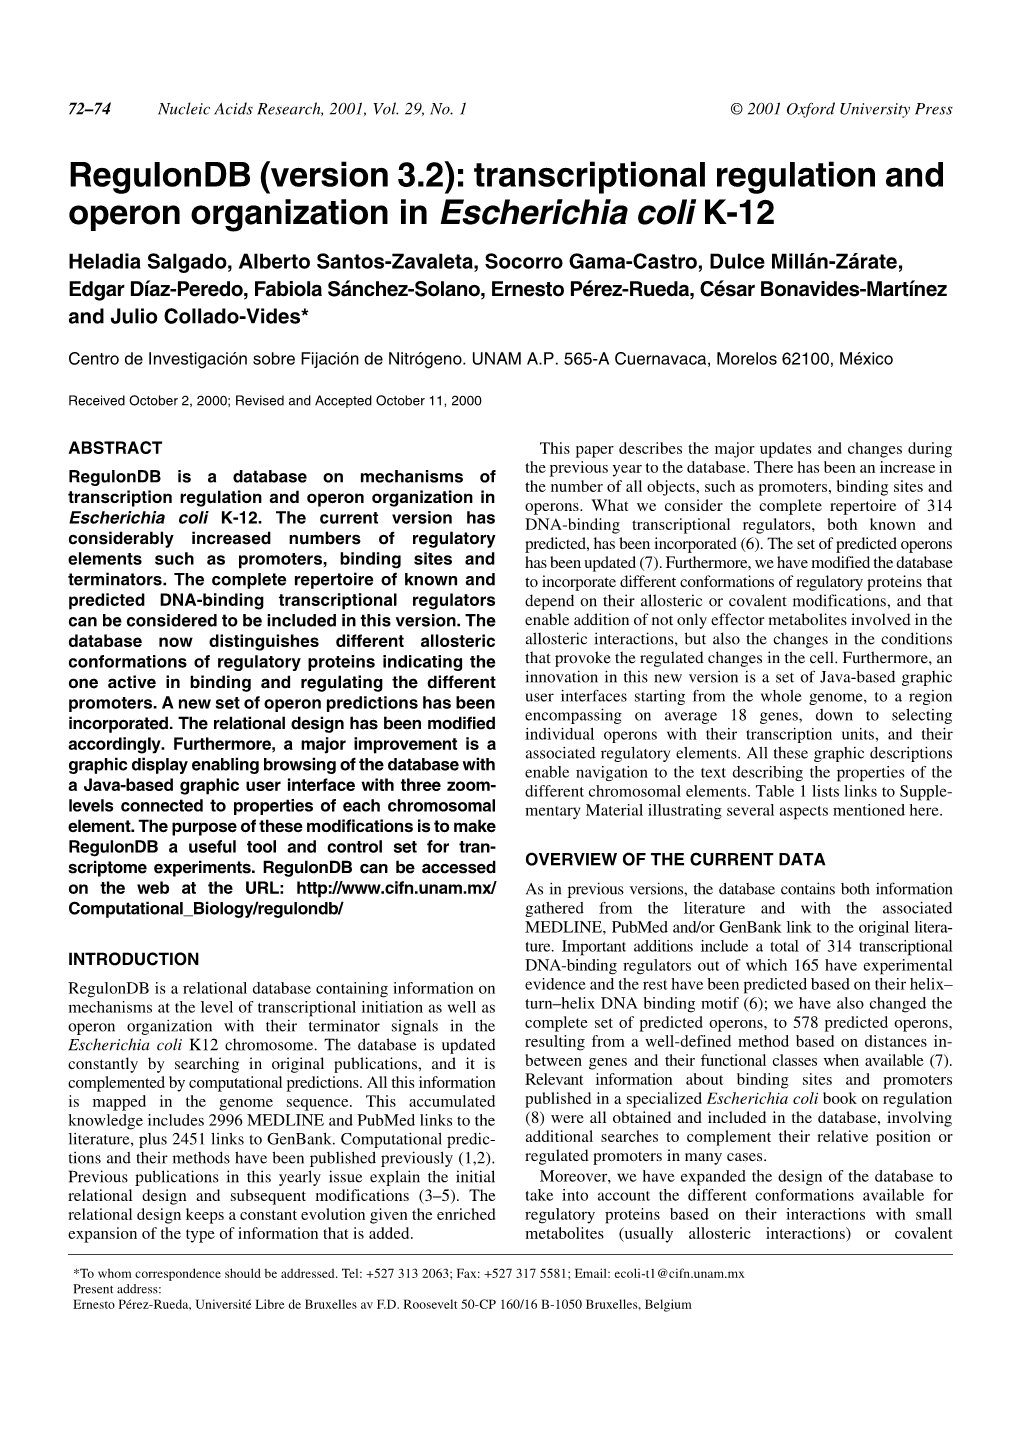 Regulondb (Version 3.2): Transcriptional Regulation and Operon Organization in Escherichia Coli K-12